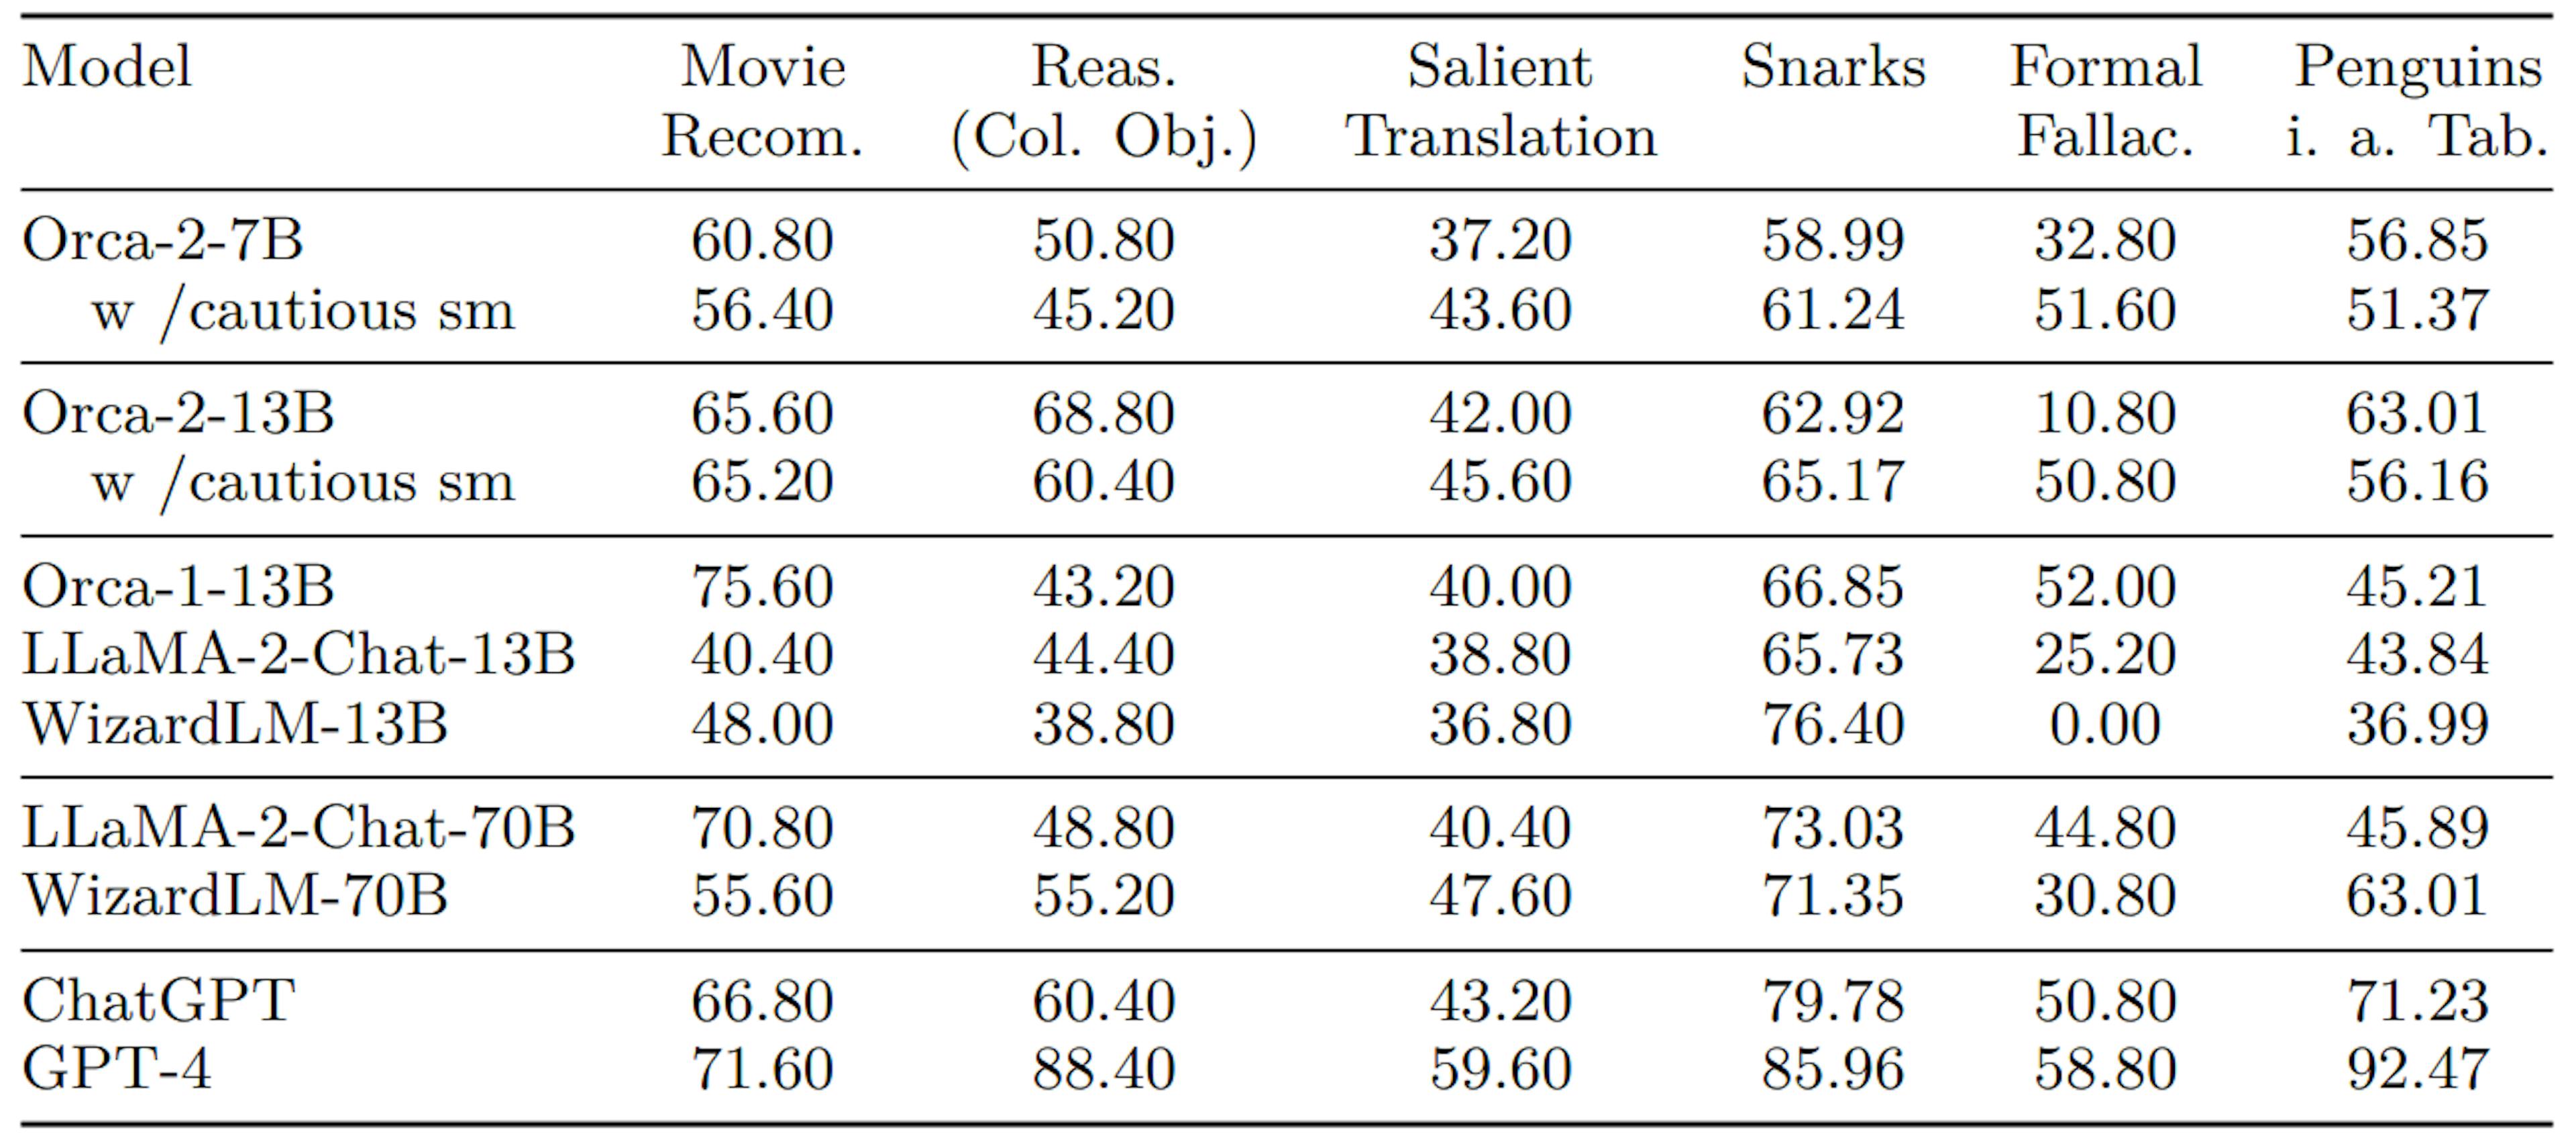 Table 9: Zero-Shot performance of models on Tasks 15-20 within BBH benchmark.